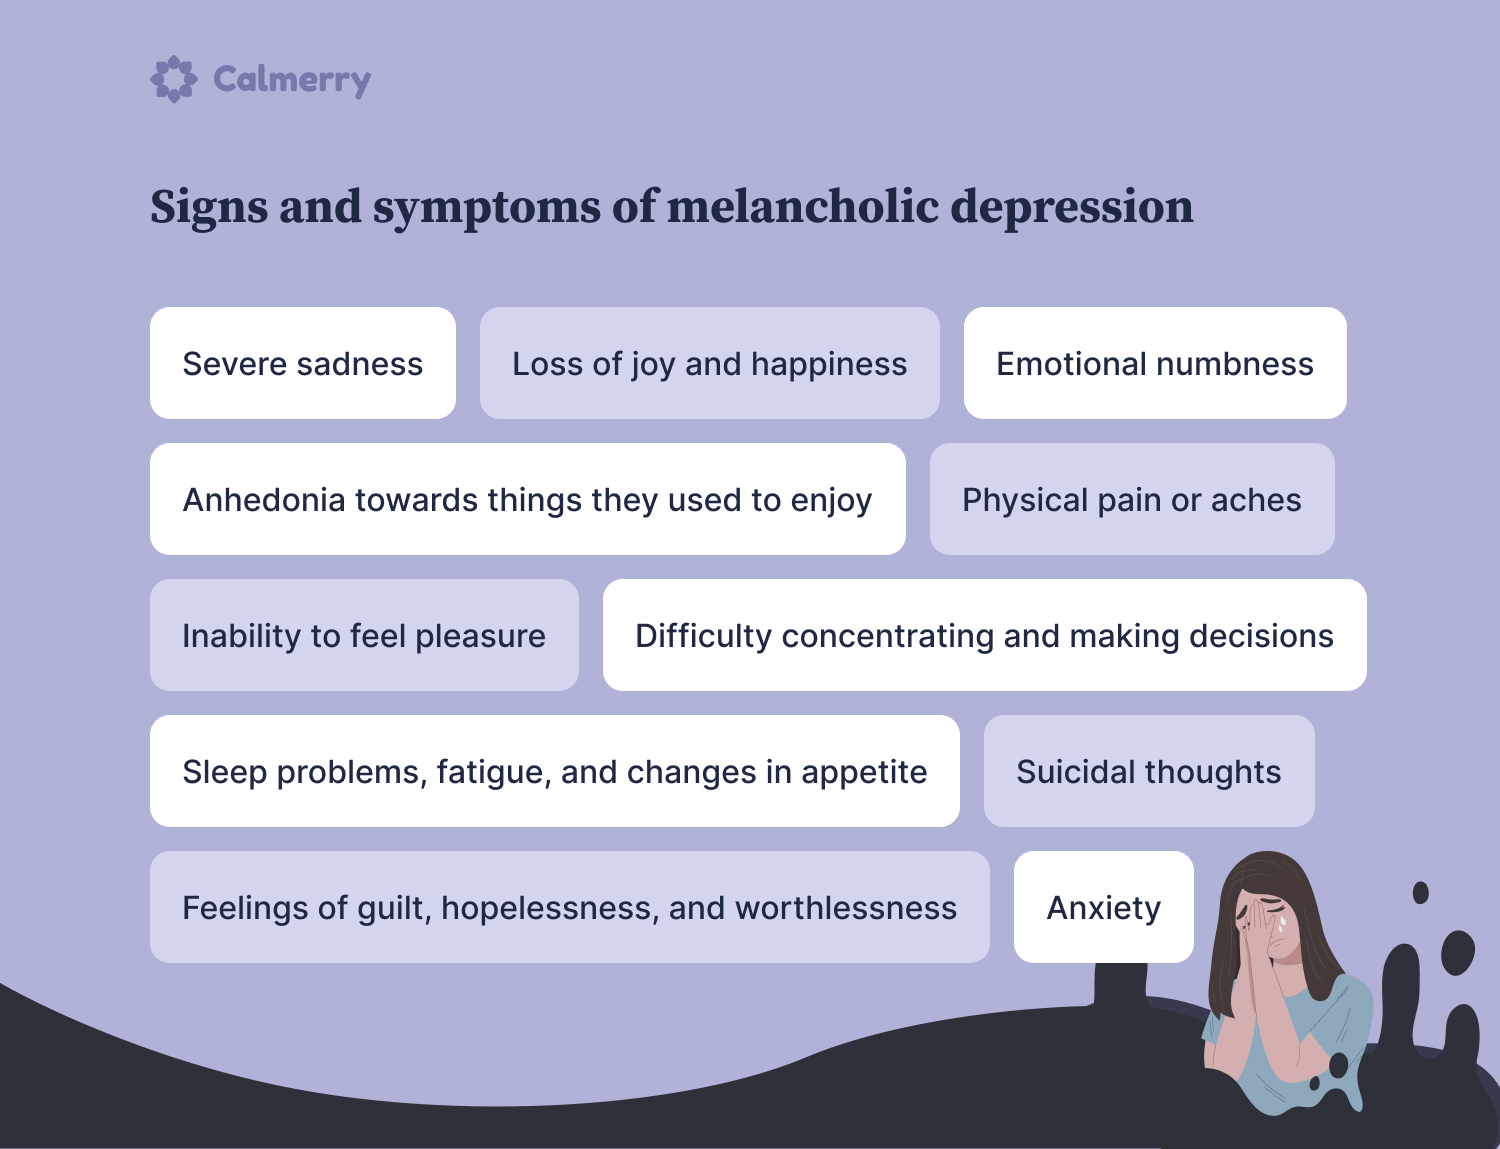 Signs and symptoms of melancholic depression